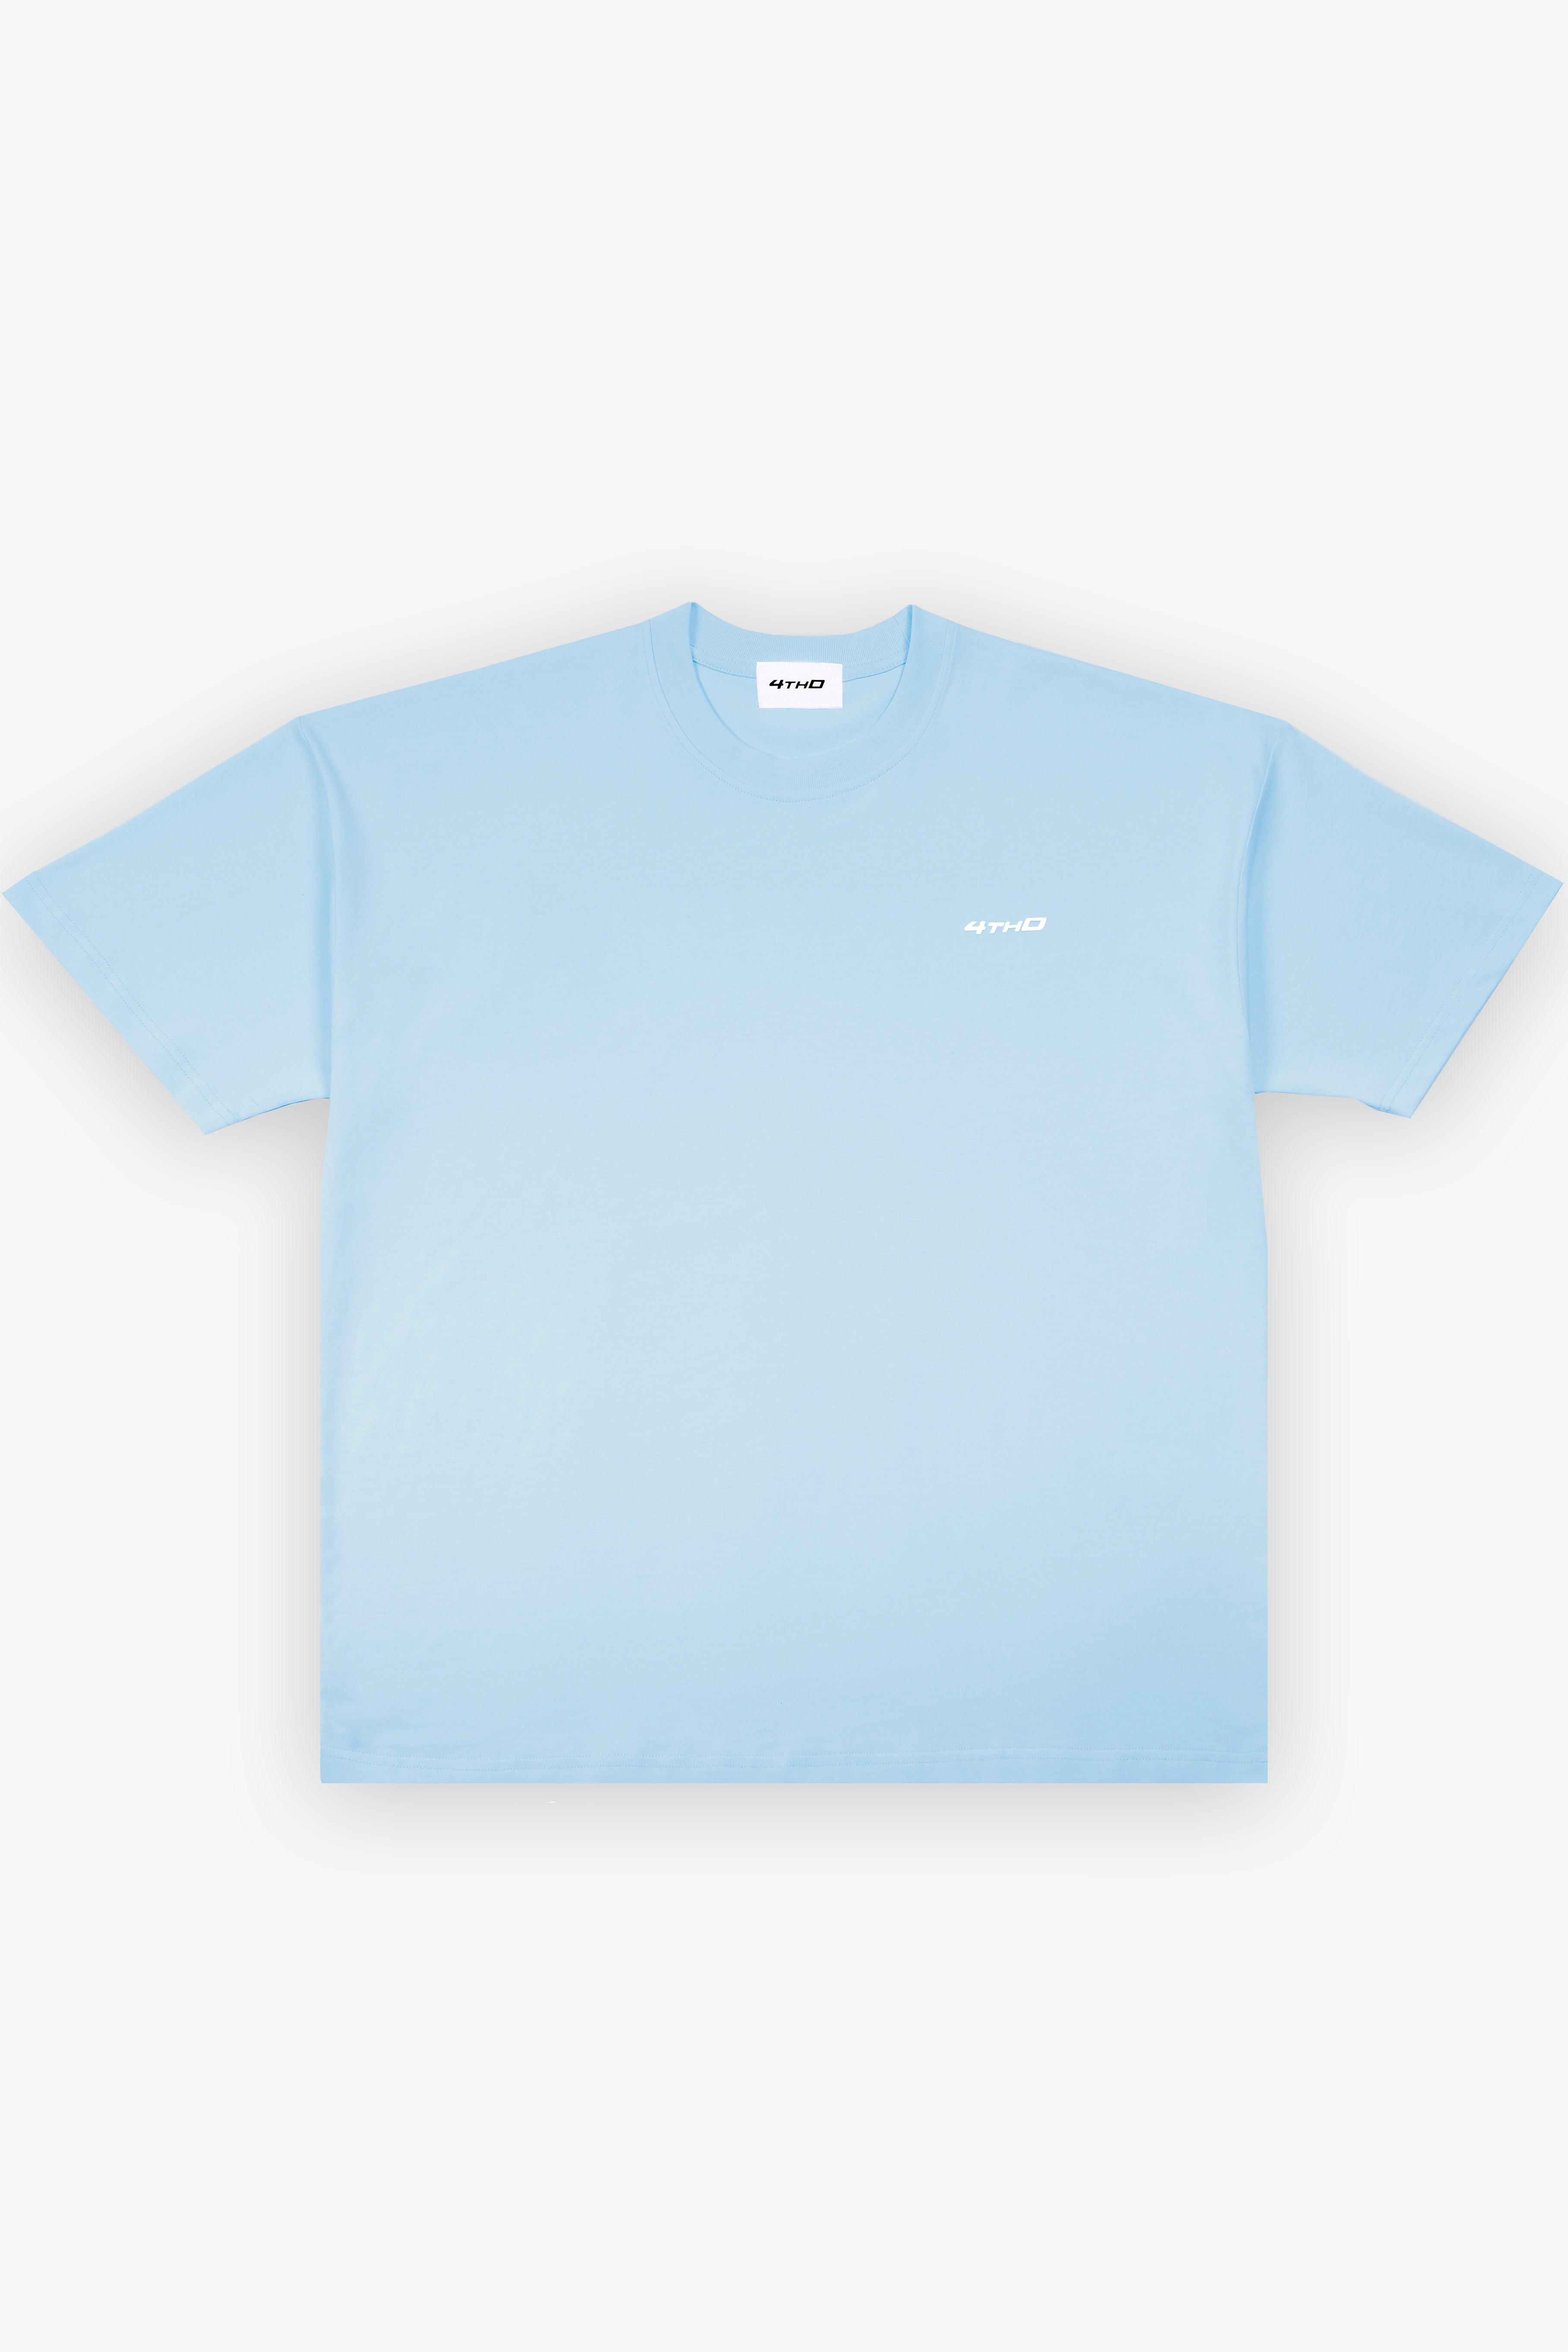 Pantone Shirt - Baby Blue